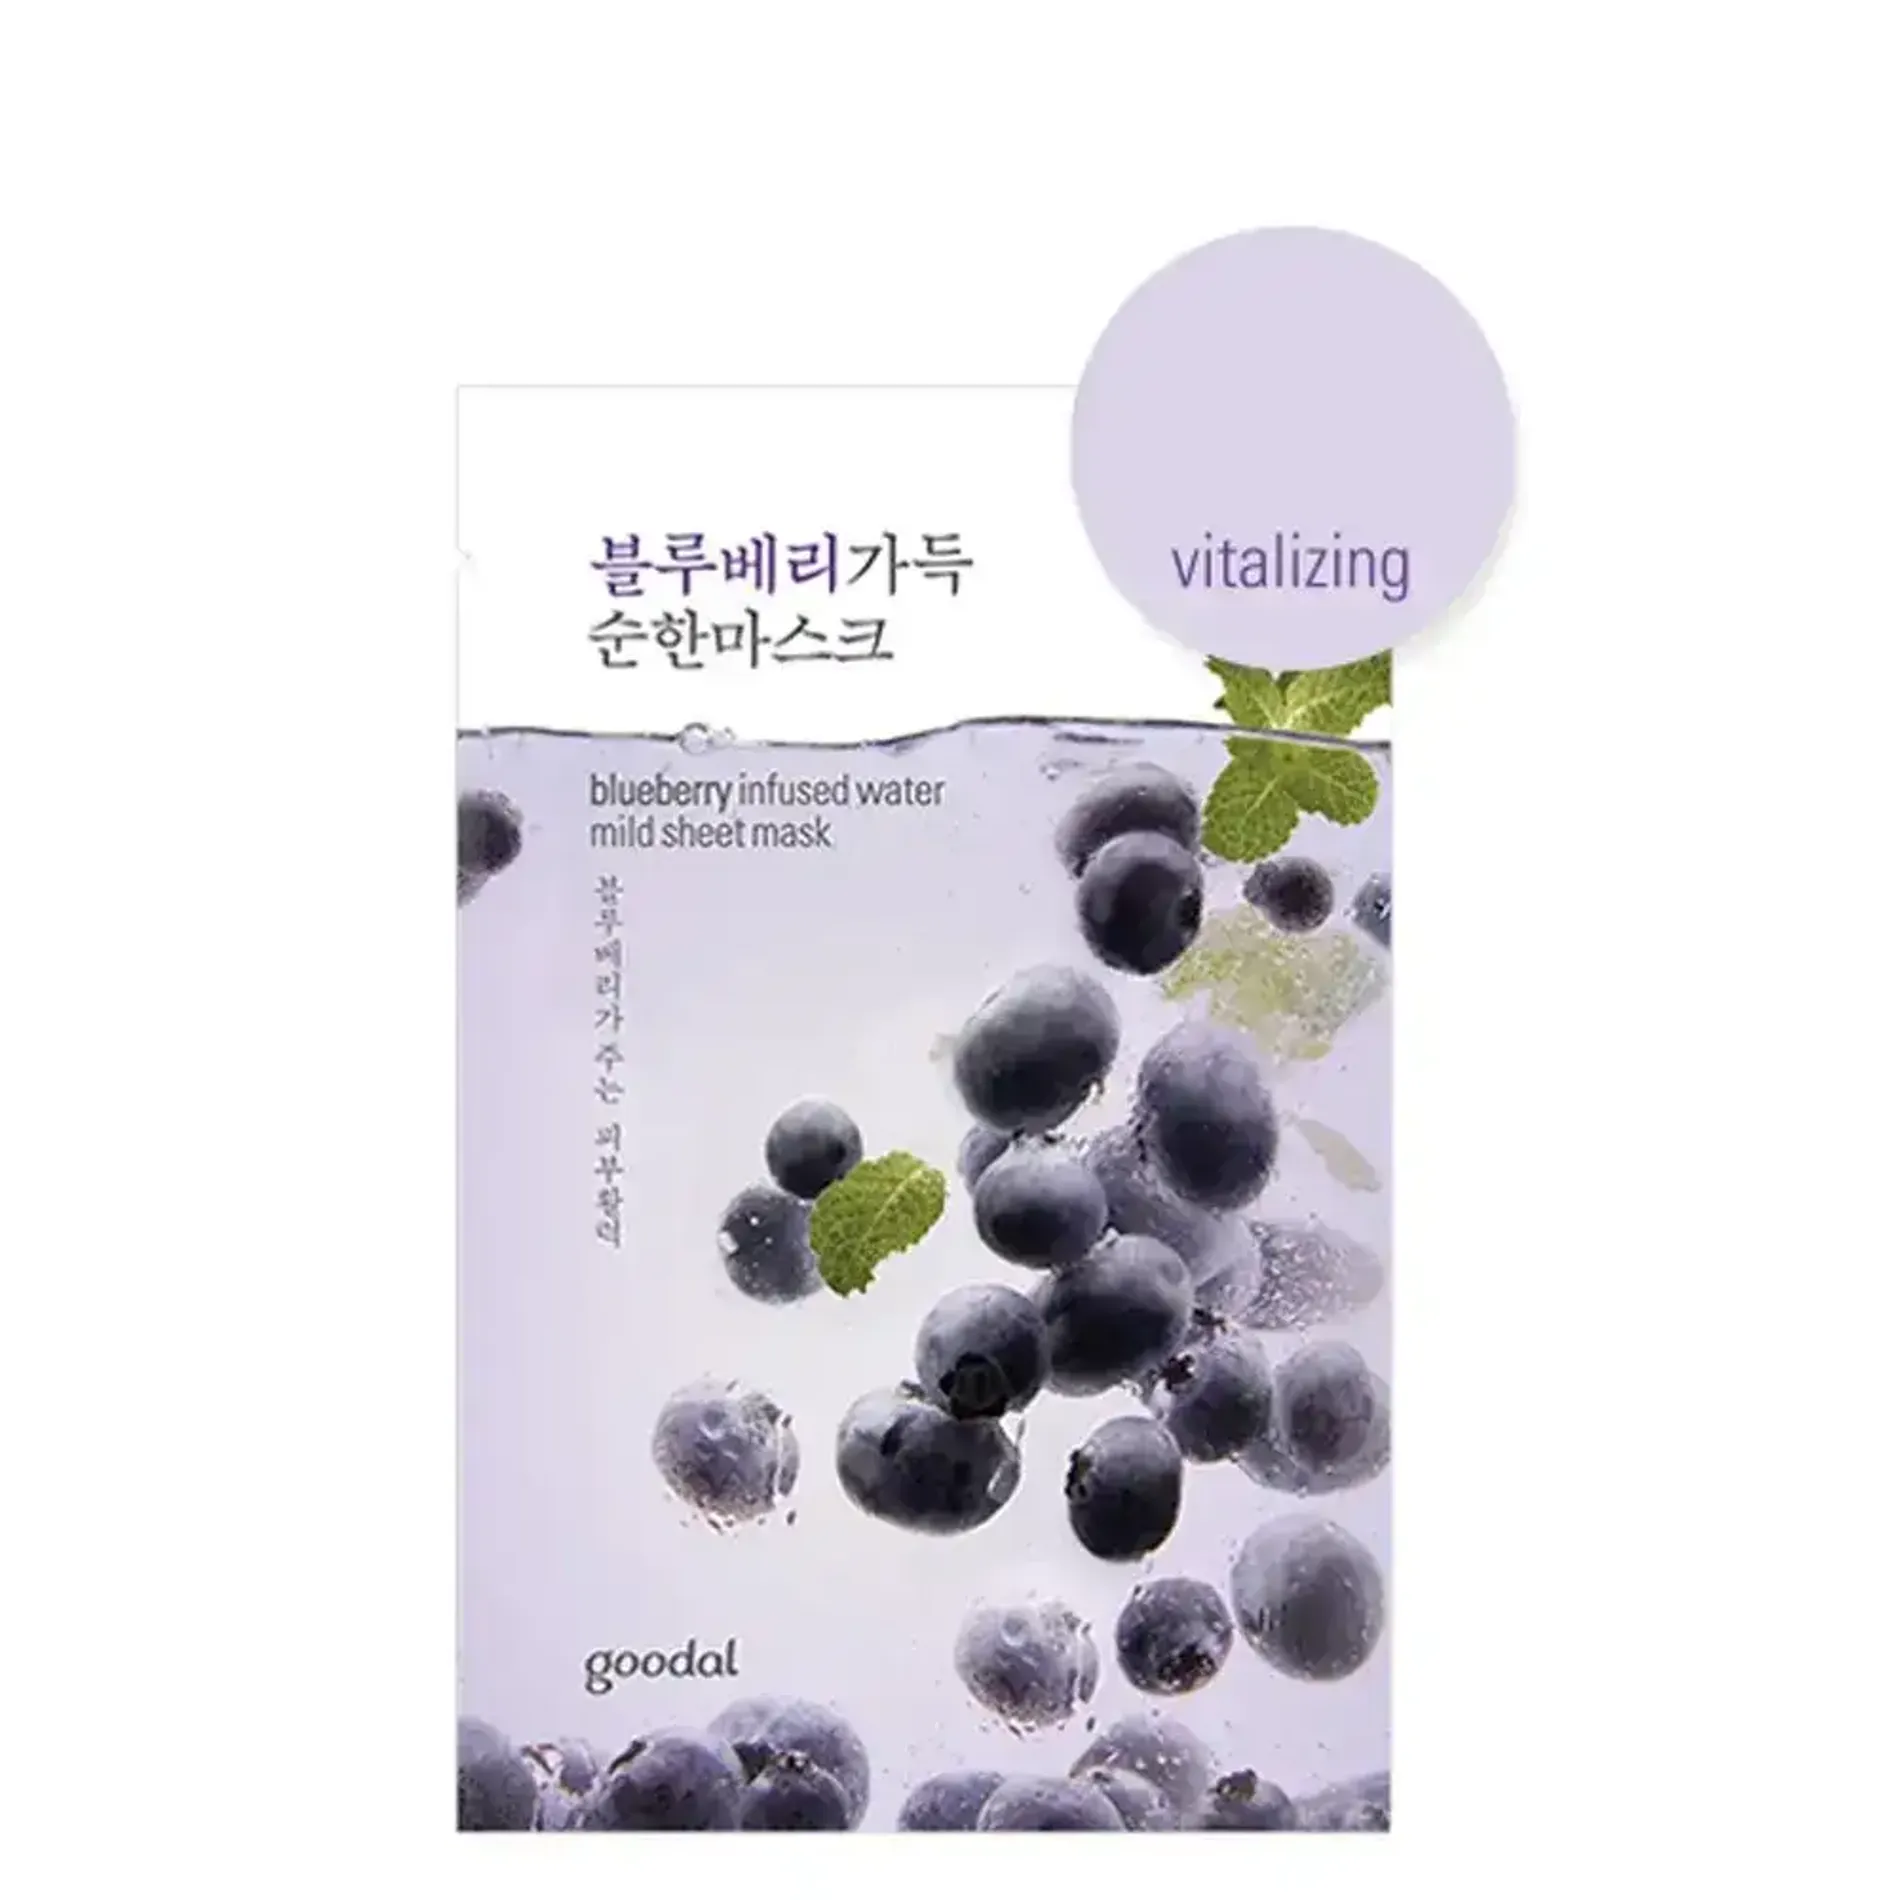 mat-na-tai-tao-da-tre-khoe-goodal-blueberry-infused-water-mild-sheet-mask-1